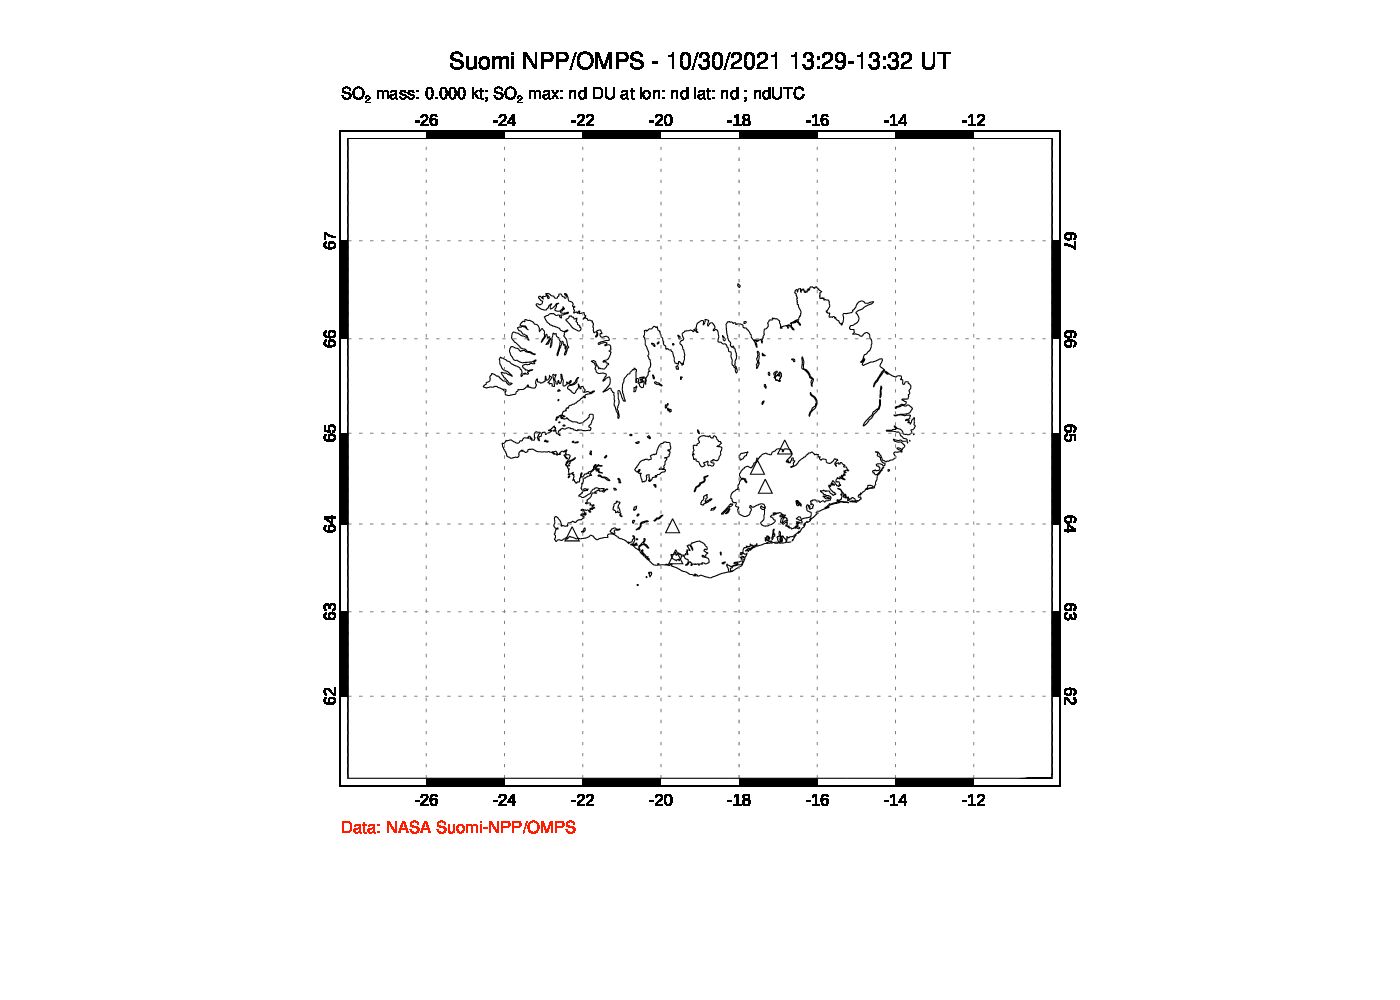 A sulfur dioxide image over Iceland on Oct 30, 2021.